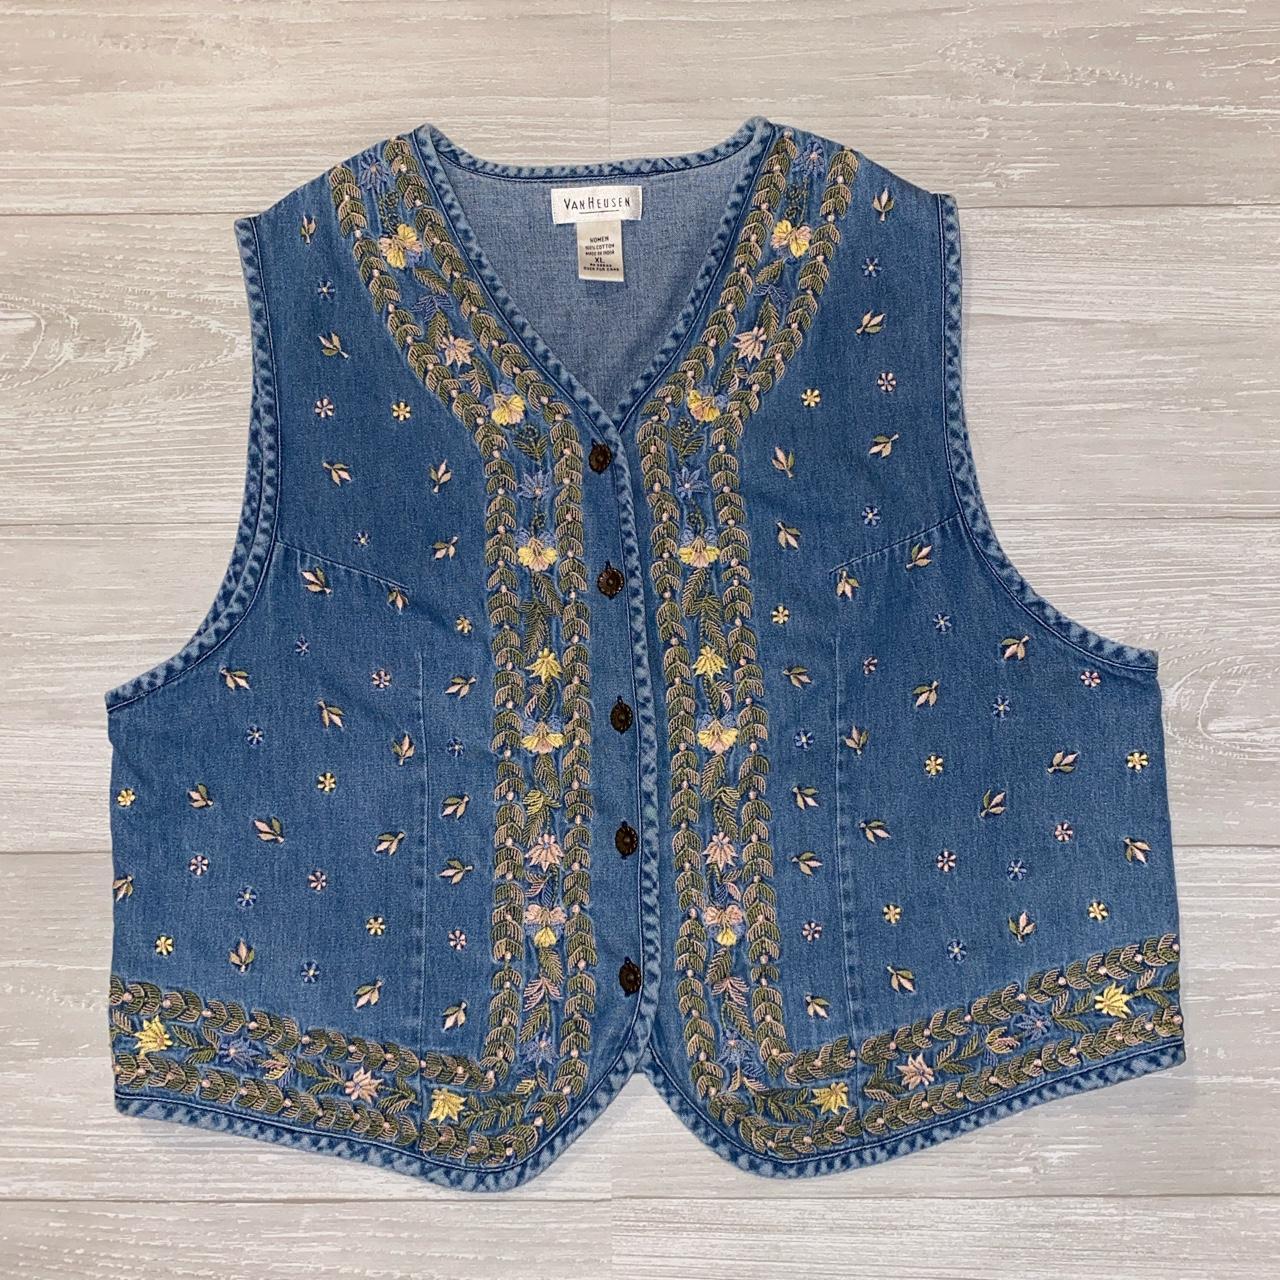 Xl fairycore denim vest 🪴🧚 gorgeous 90’s embroidered... - Depop